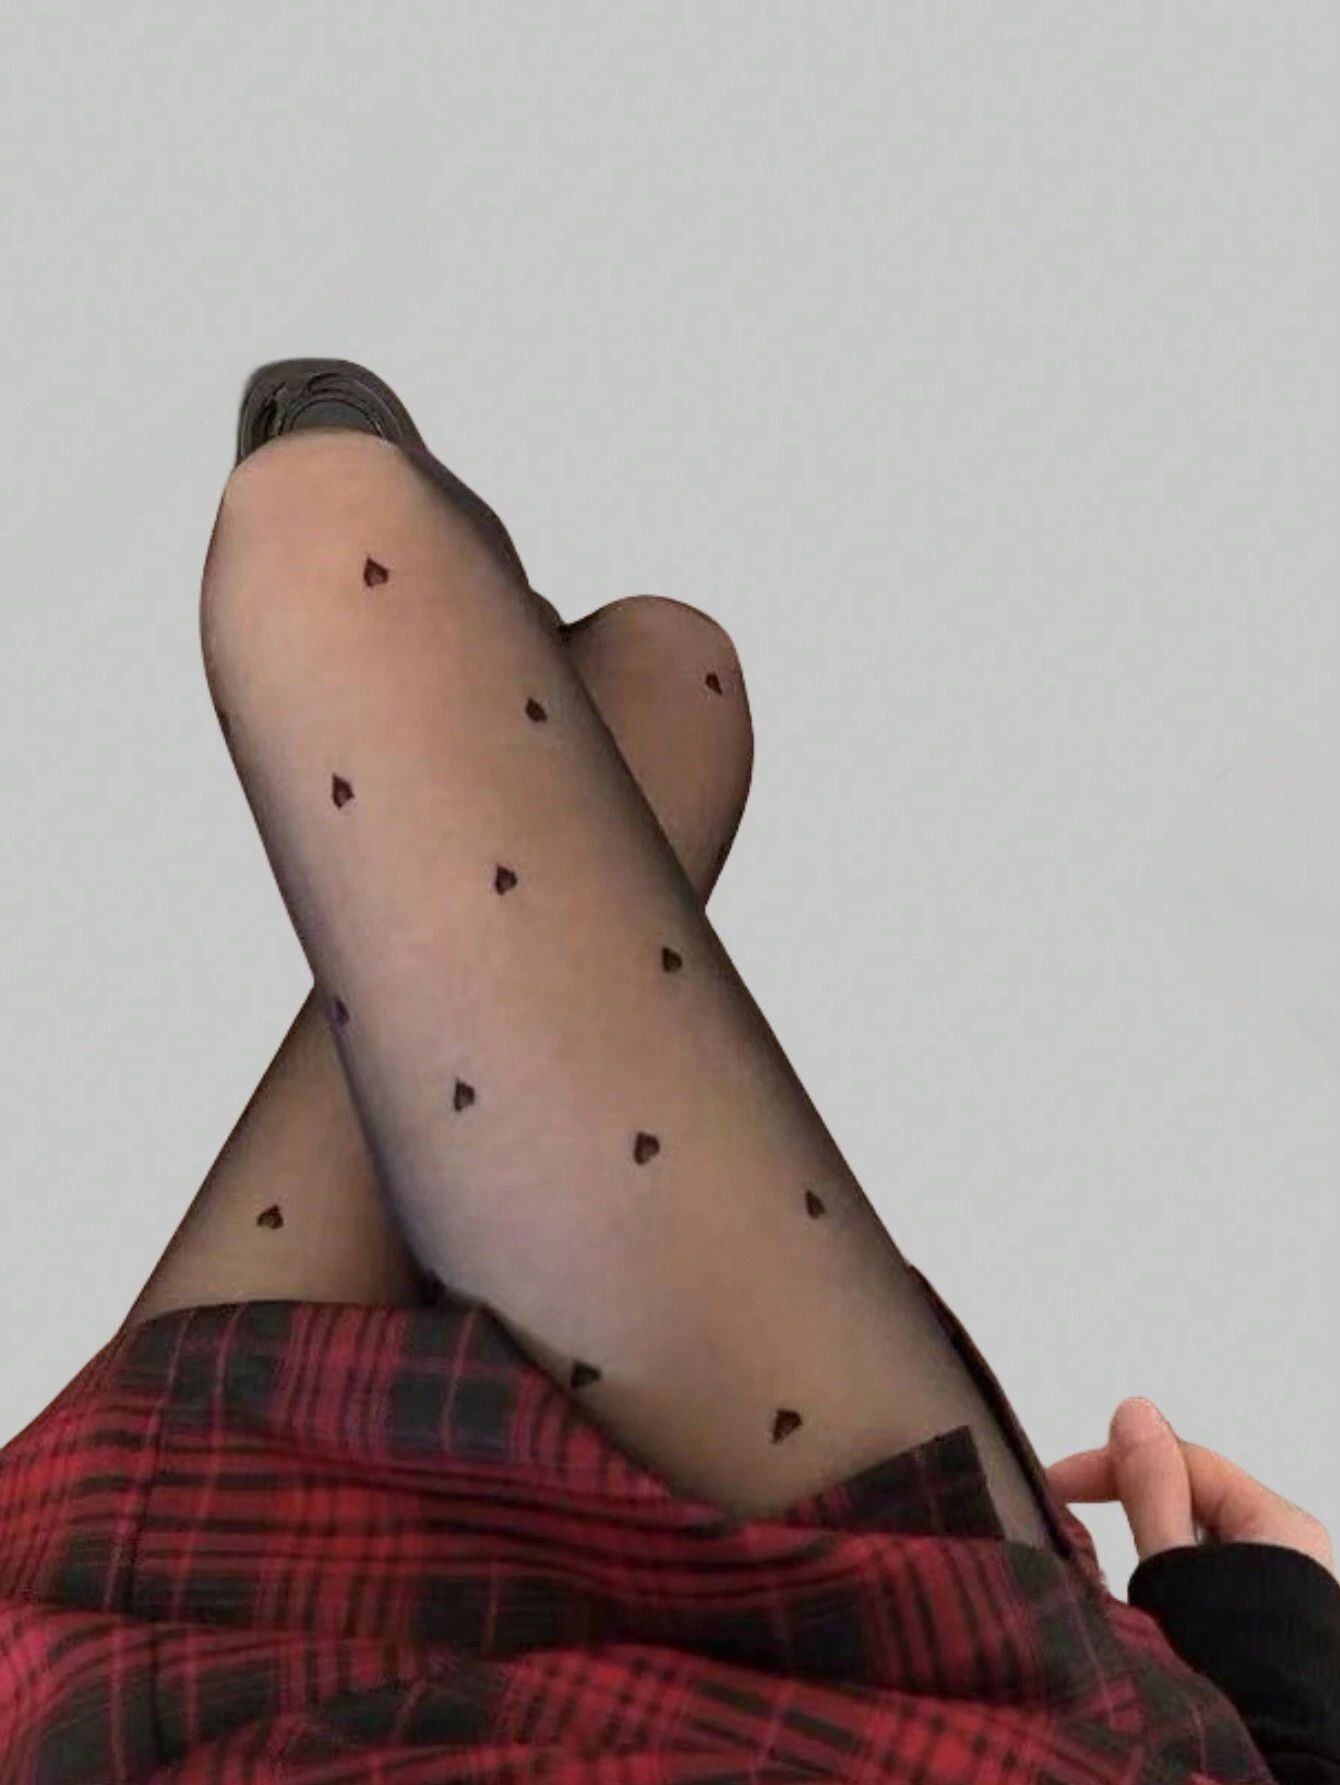 ROMWE Fairycore 1pair Women's Seasonal Black Sheer Stockings With Small Hearts Design | SHEIN